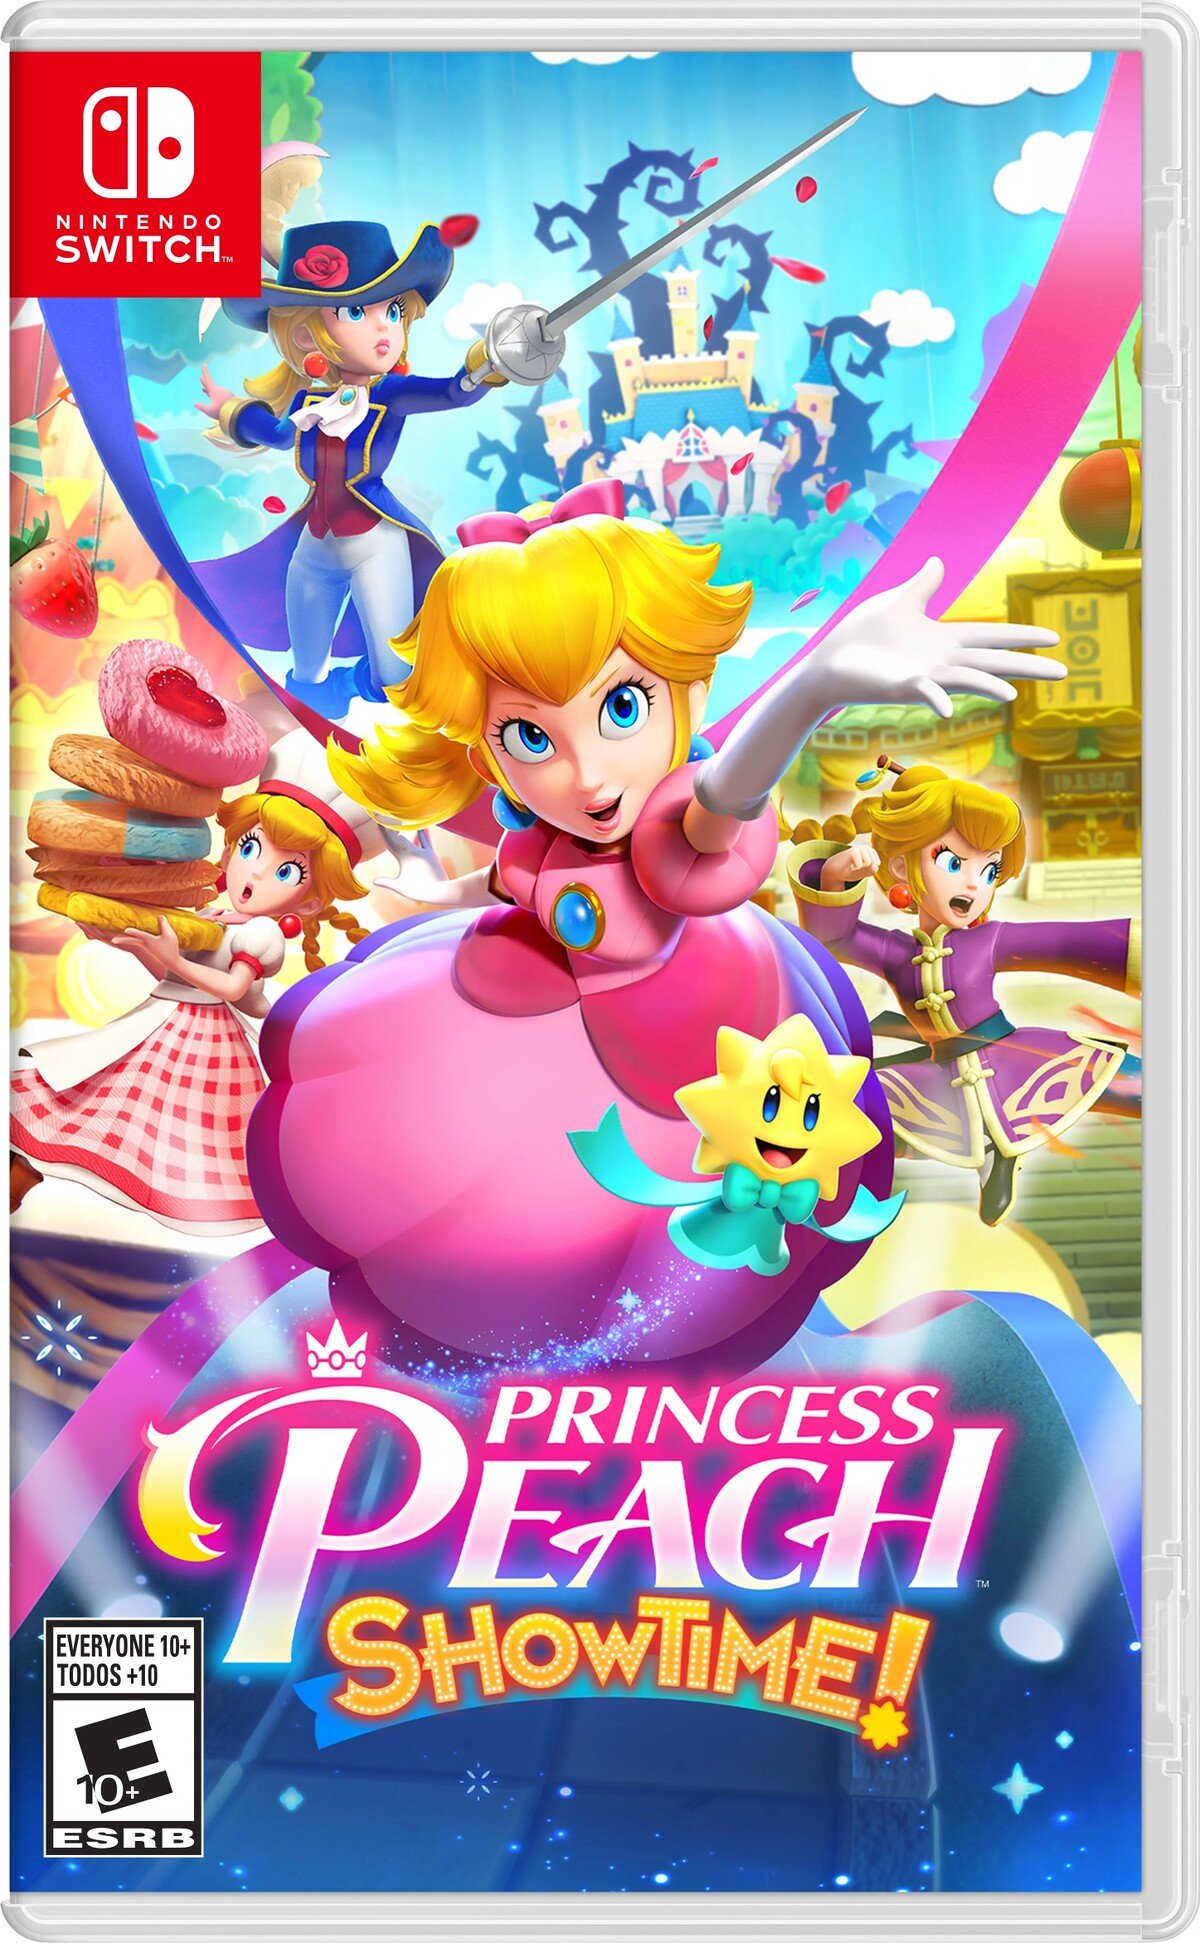 Nintendo reveals Princess Peach-inspired pink Switch Joy-Cons